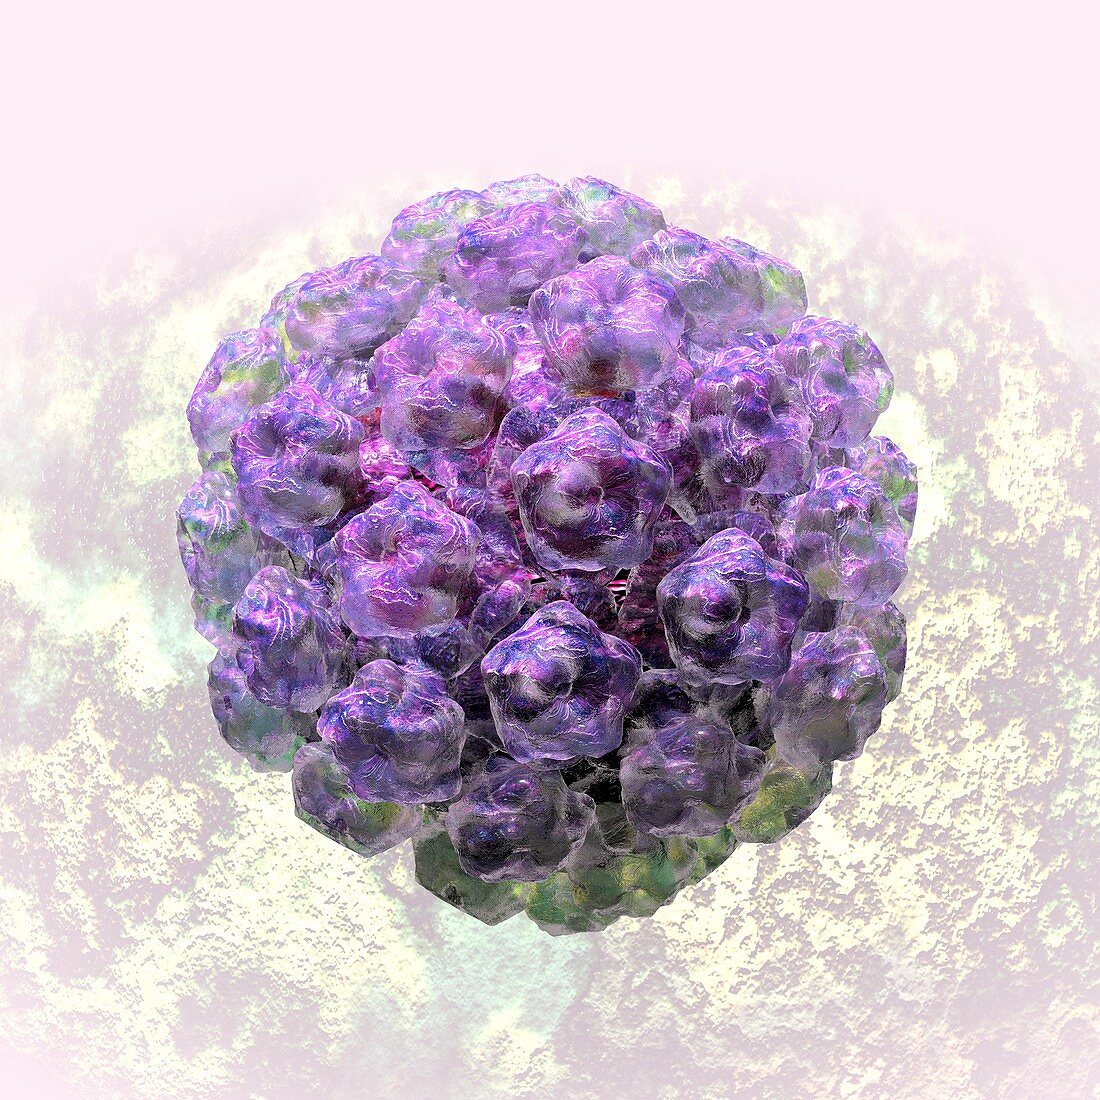 Human papilloma virus particle,artwork